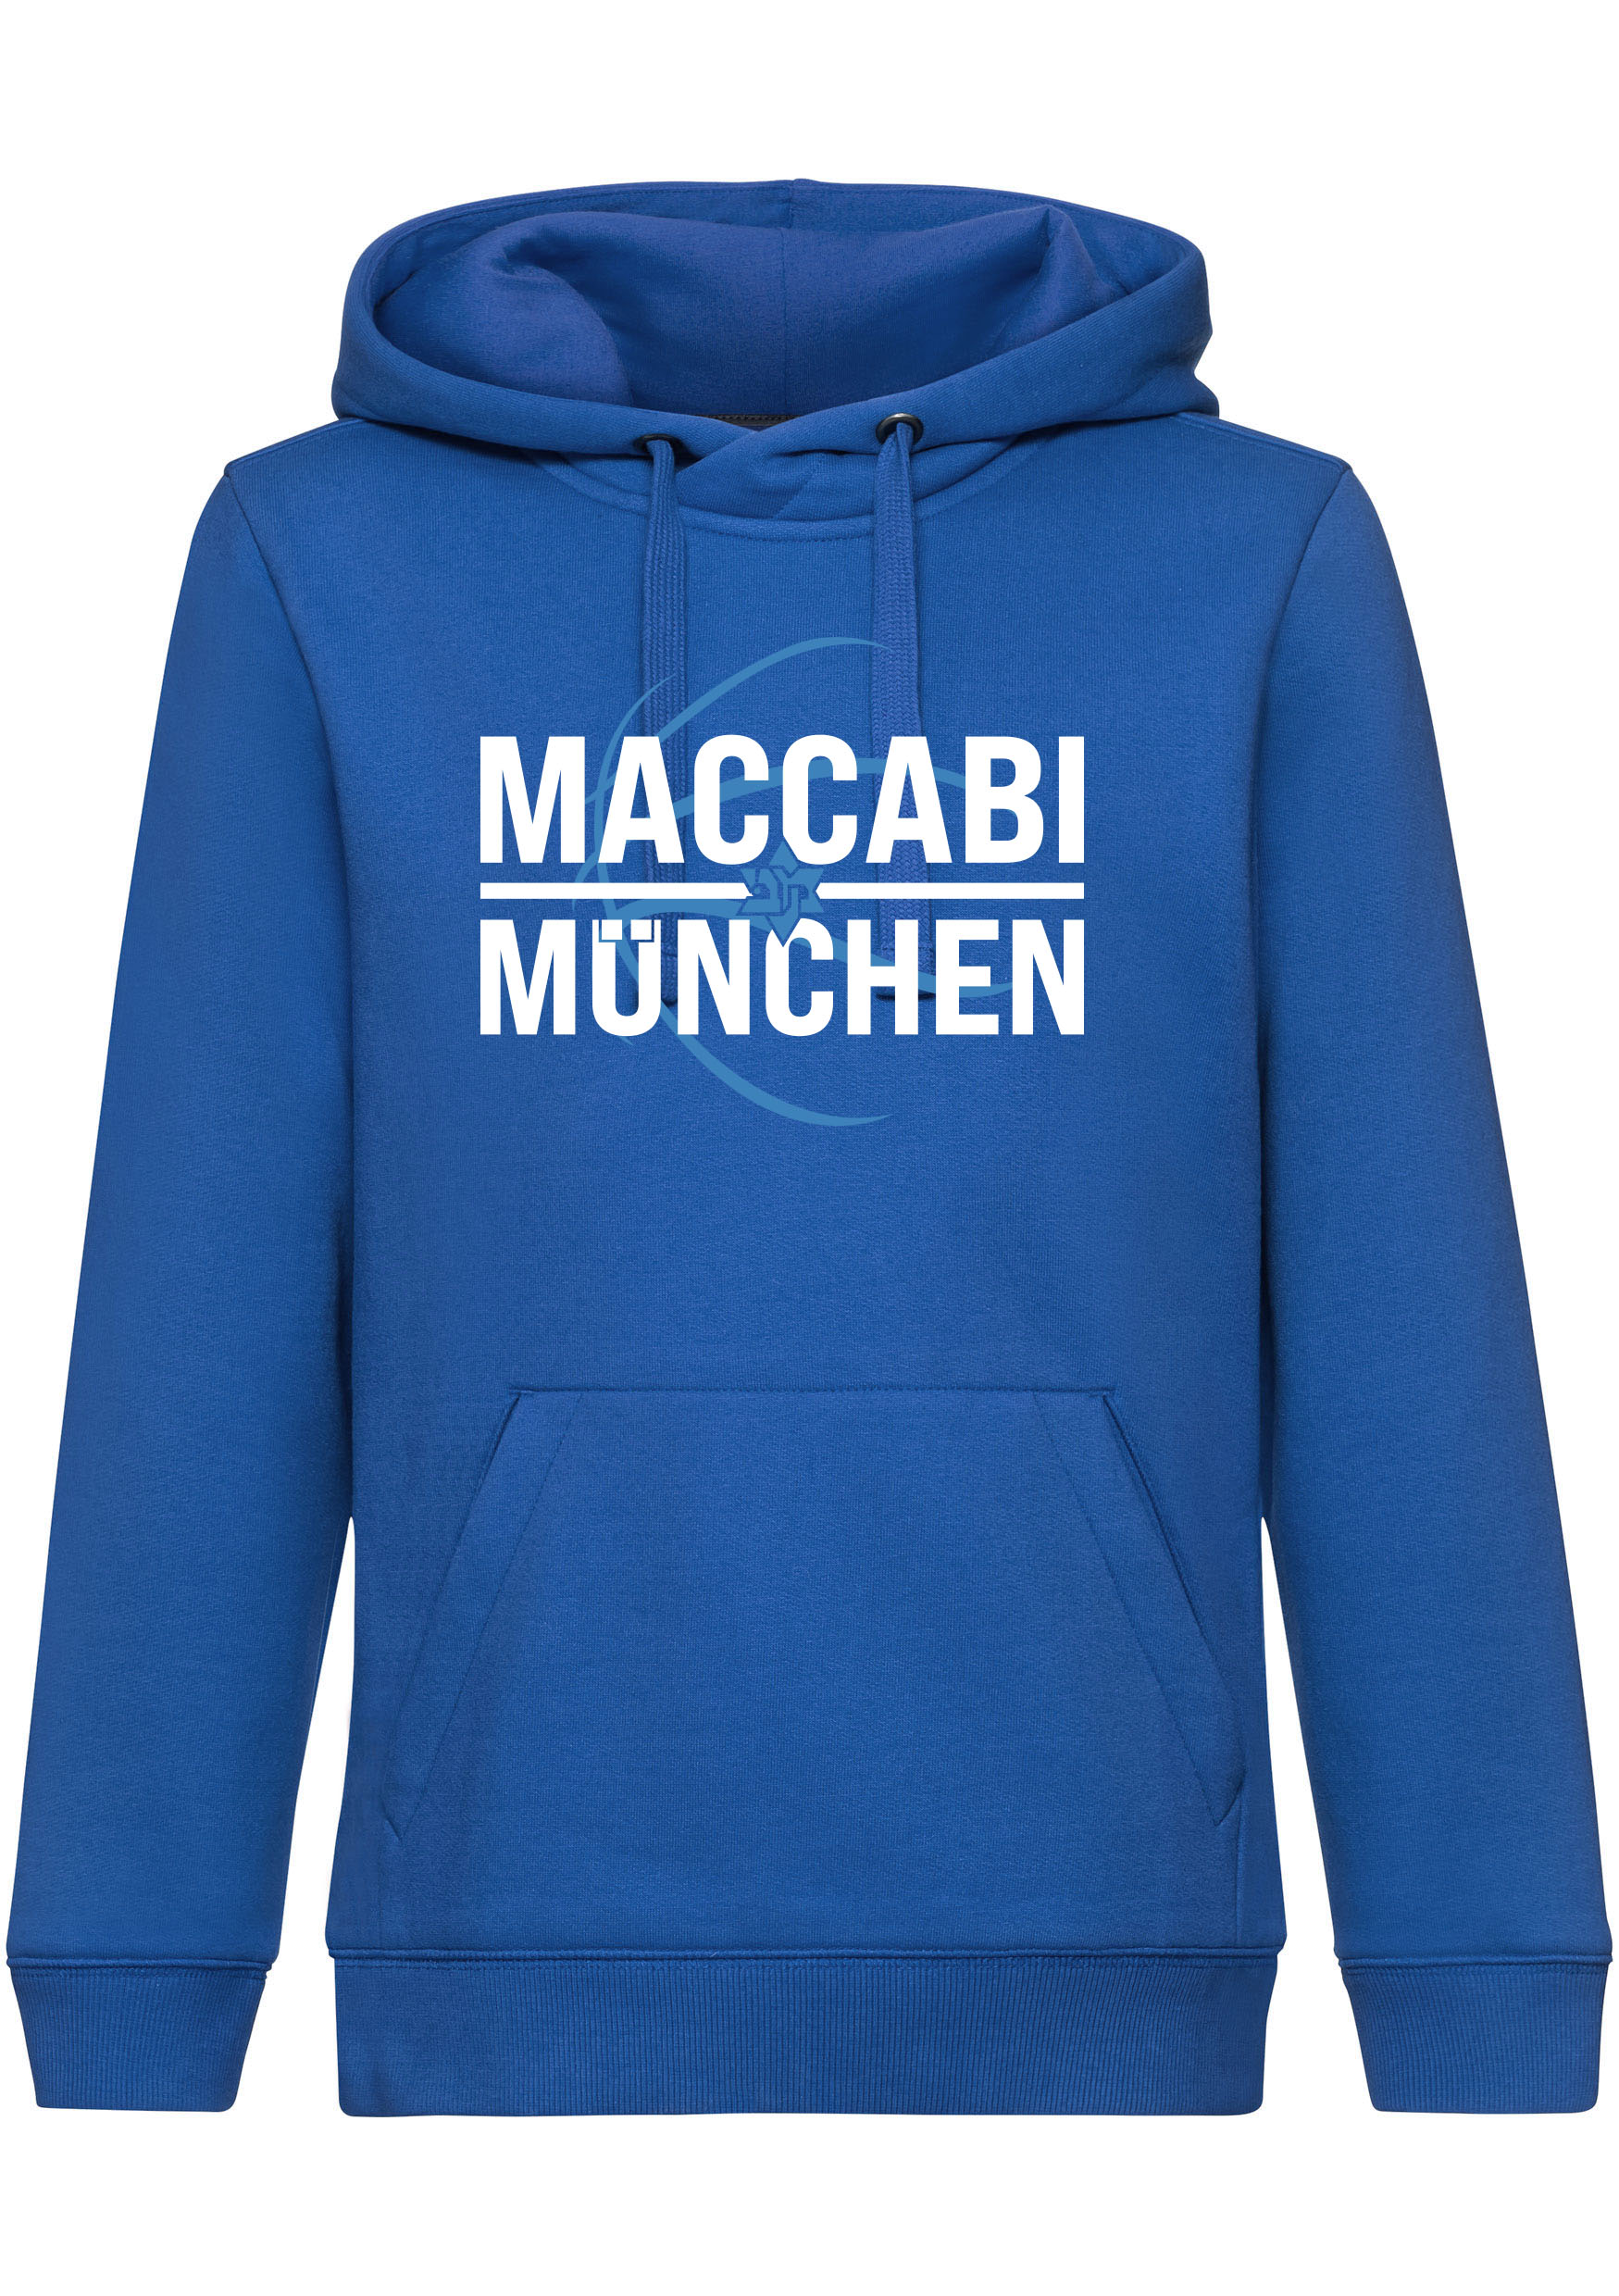 Maccabi München Hoodie